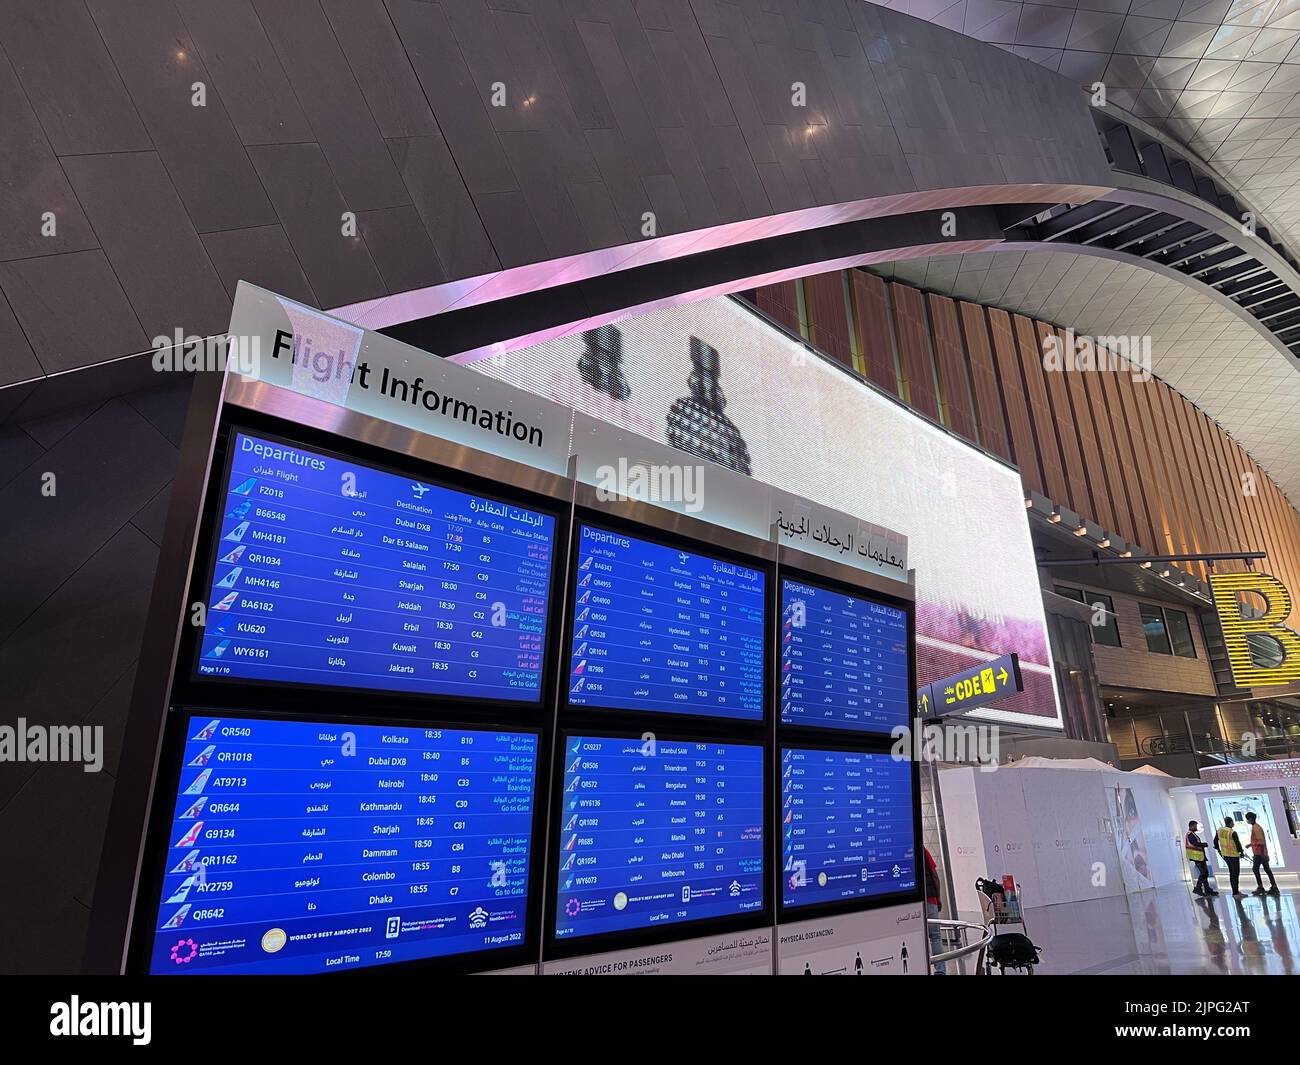 Hamad International Airport Doha Qatar. Flight Information Board Stock Photo